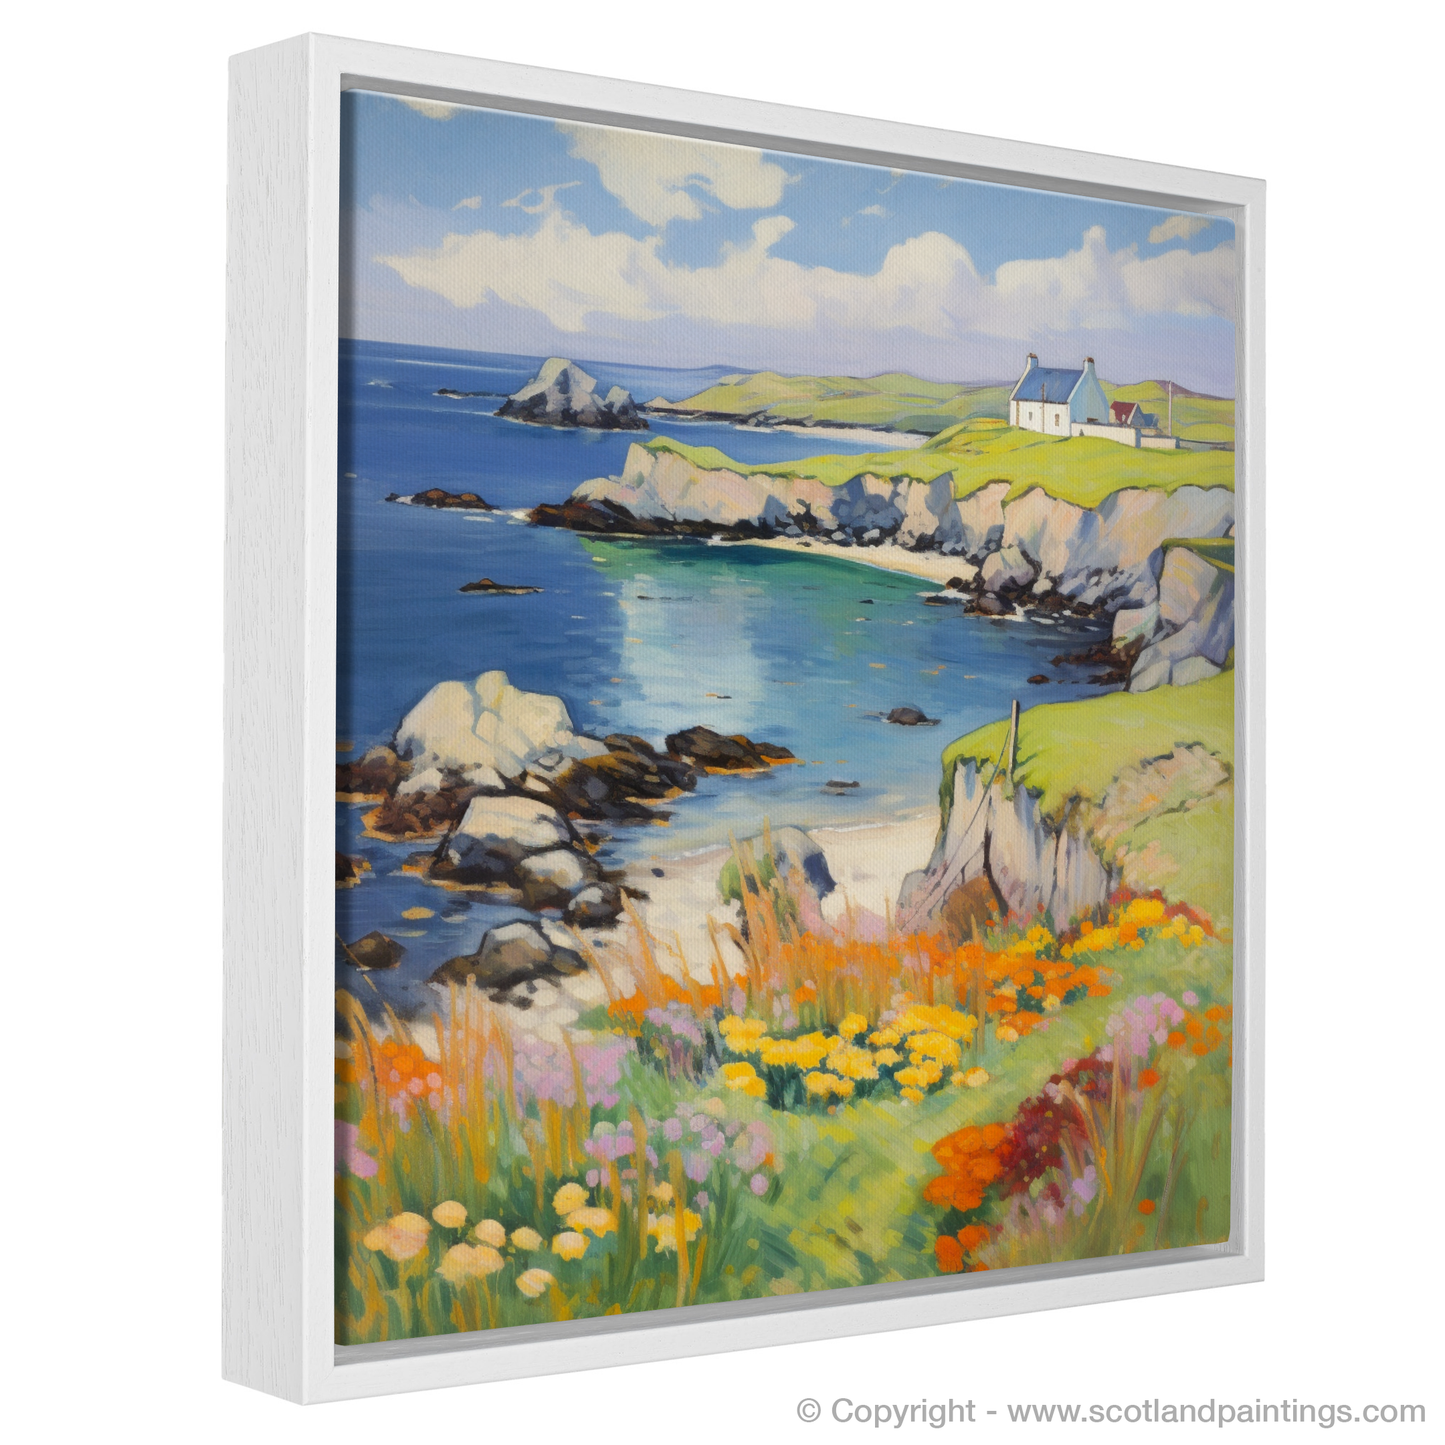 Painting and Art Print of Shetland, North of mainland Scotland in summer entitled "Shetland Summer Serenade".